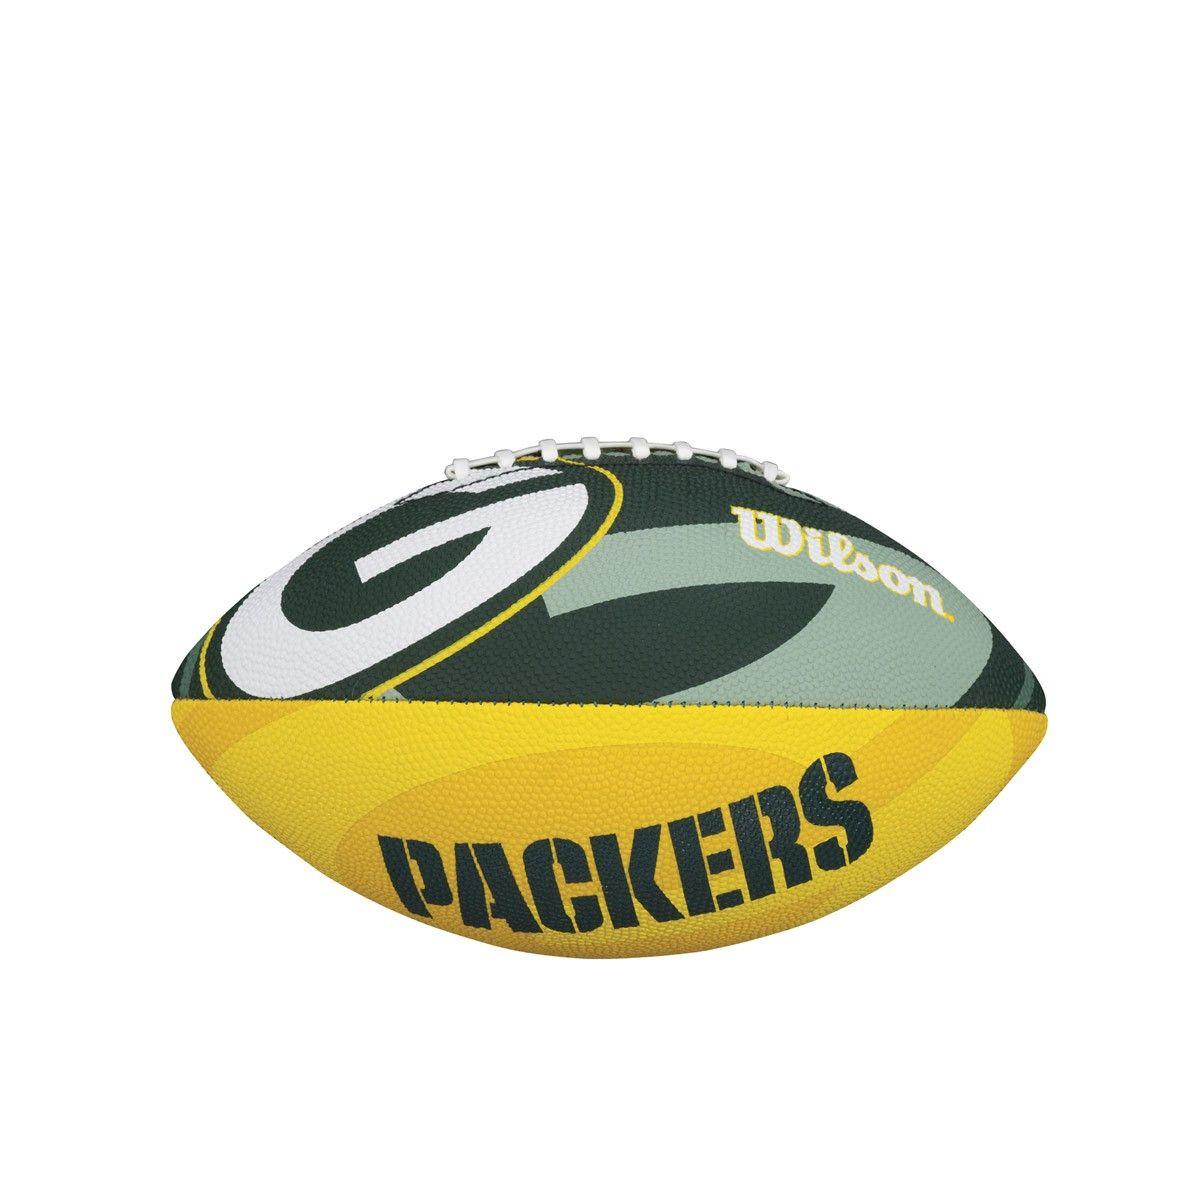 NFL Packers Logo - NFL TEAM LOGO JUNIOR SIZE FOOTBALL BAY PACKERS. Wilson